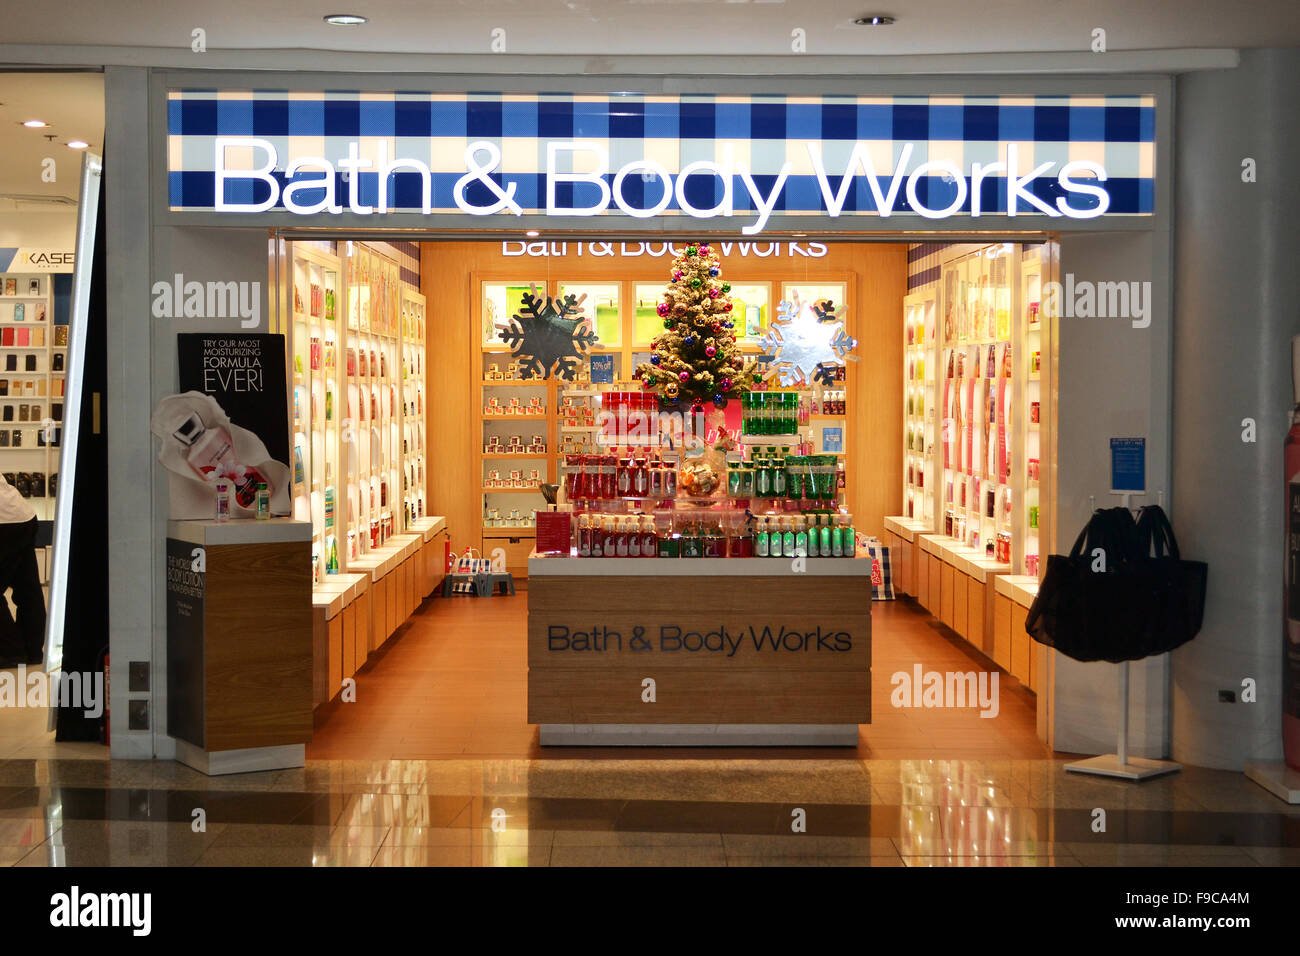 Bath & Body Works shop at Abu Dhabi airport duty free Stock Photo - Alamy